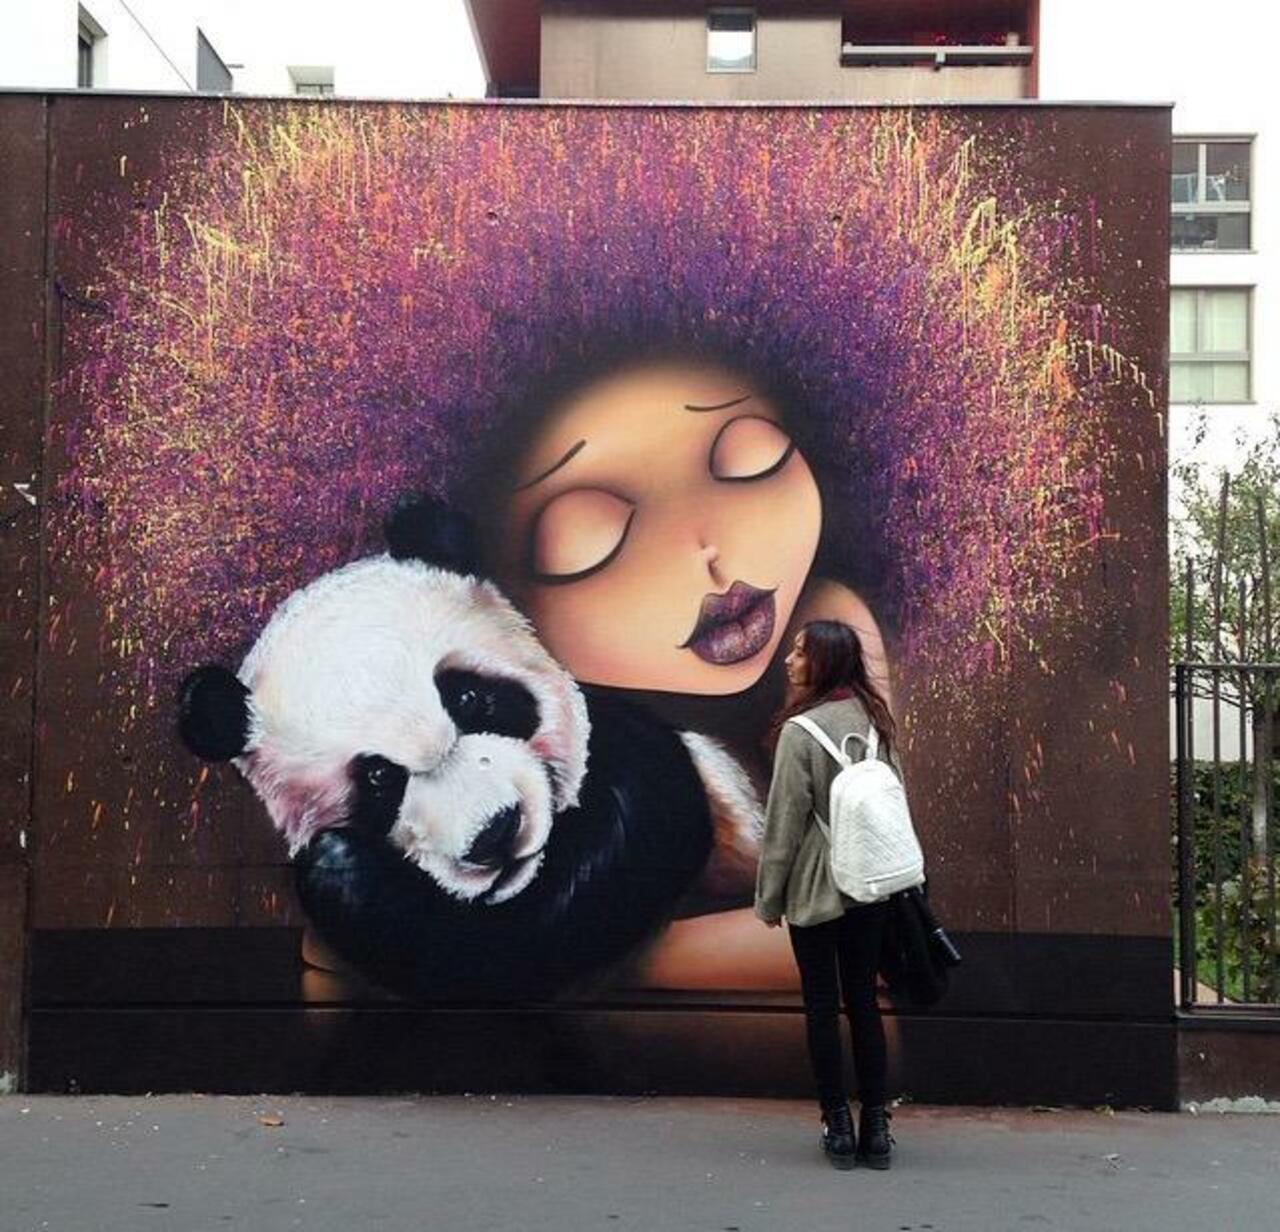 Street Art by VinieGraffiti in Paris 

#art #graffiti #mural #streetart http://t.co/HprMtzDomf